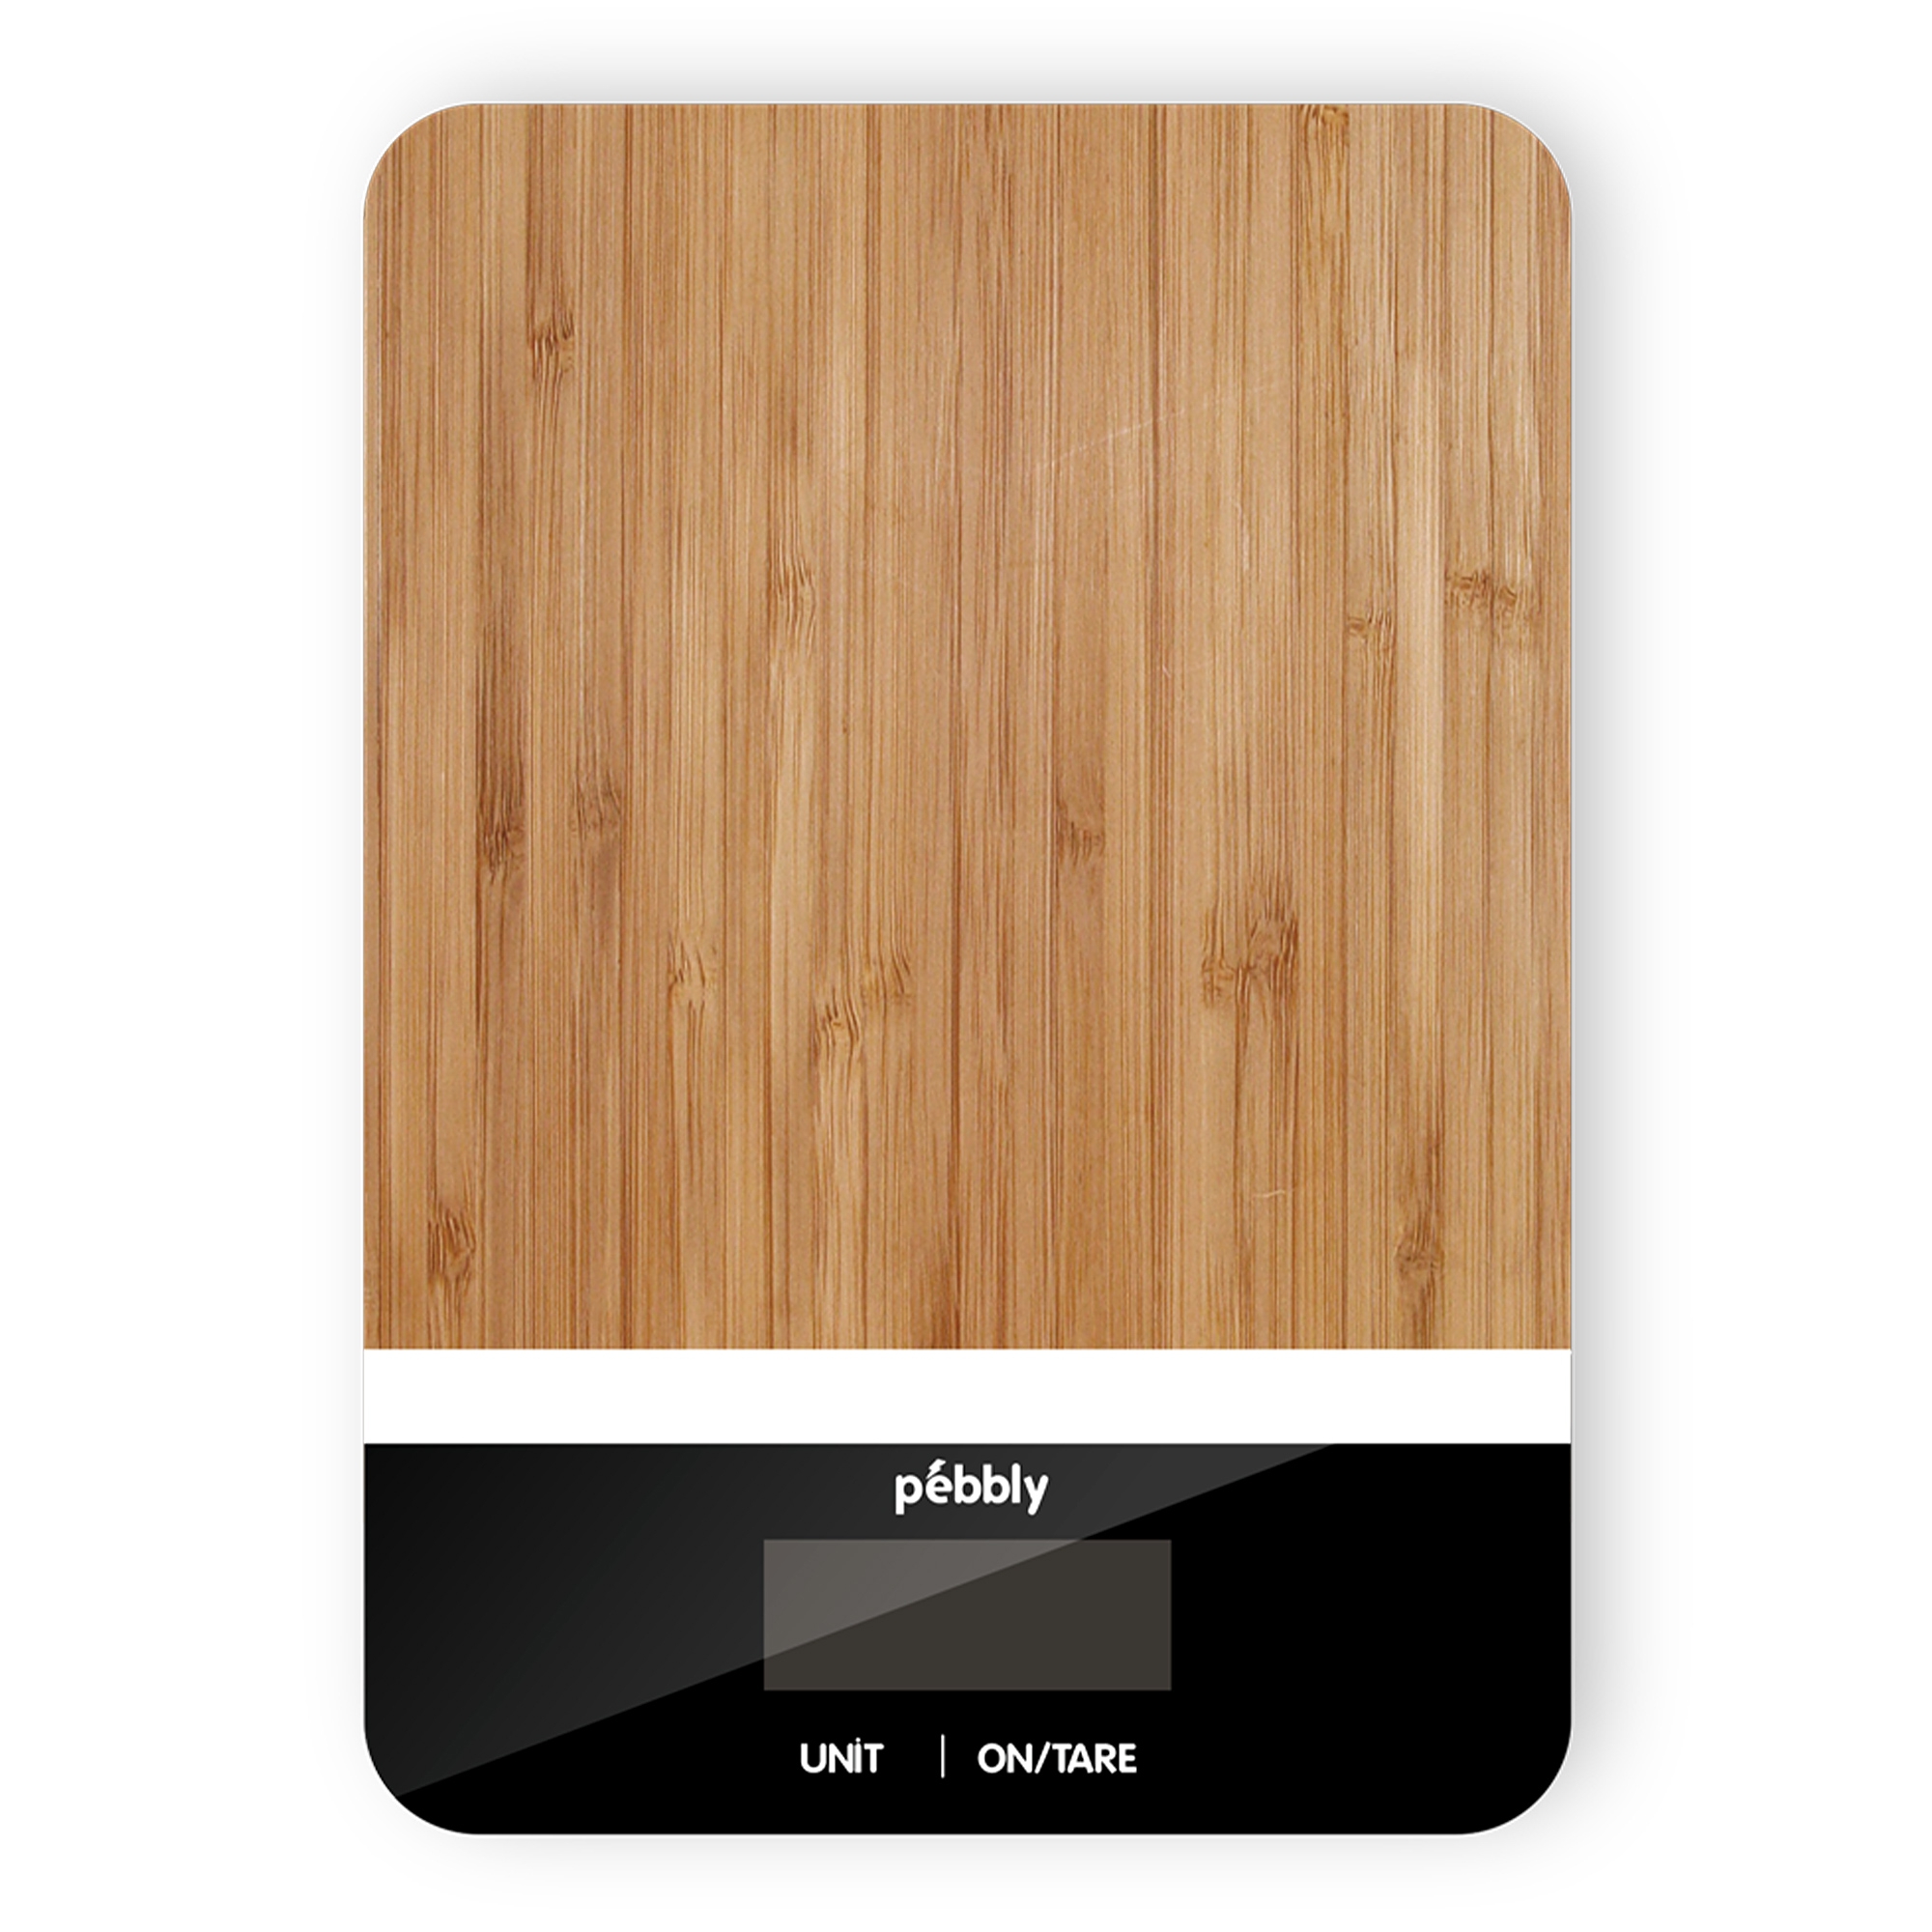 Pebbly - Rectangular bamboo kitchen scale  - Black